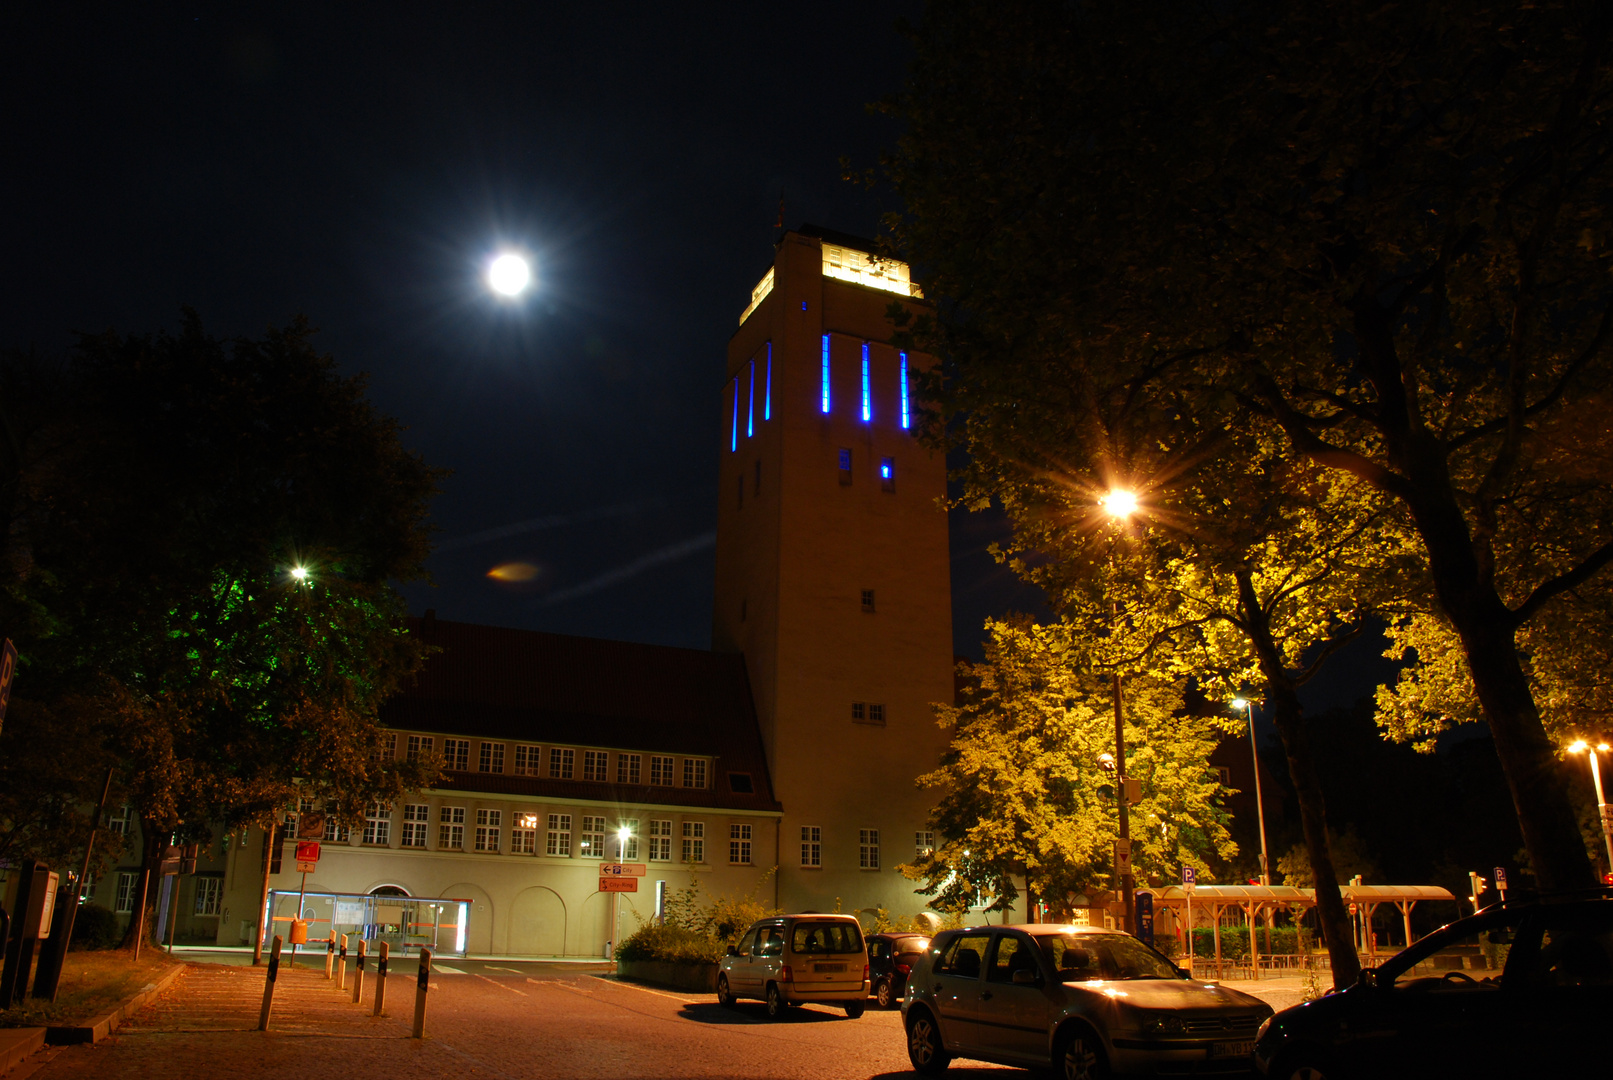 Wasserturm Delmenhorst